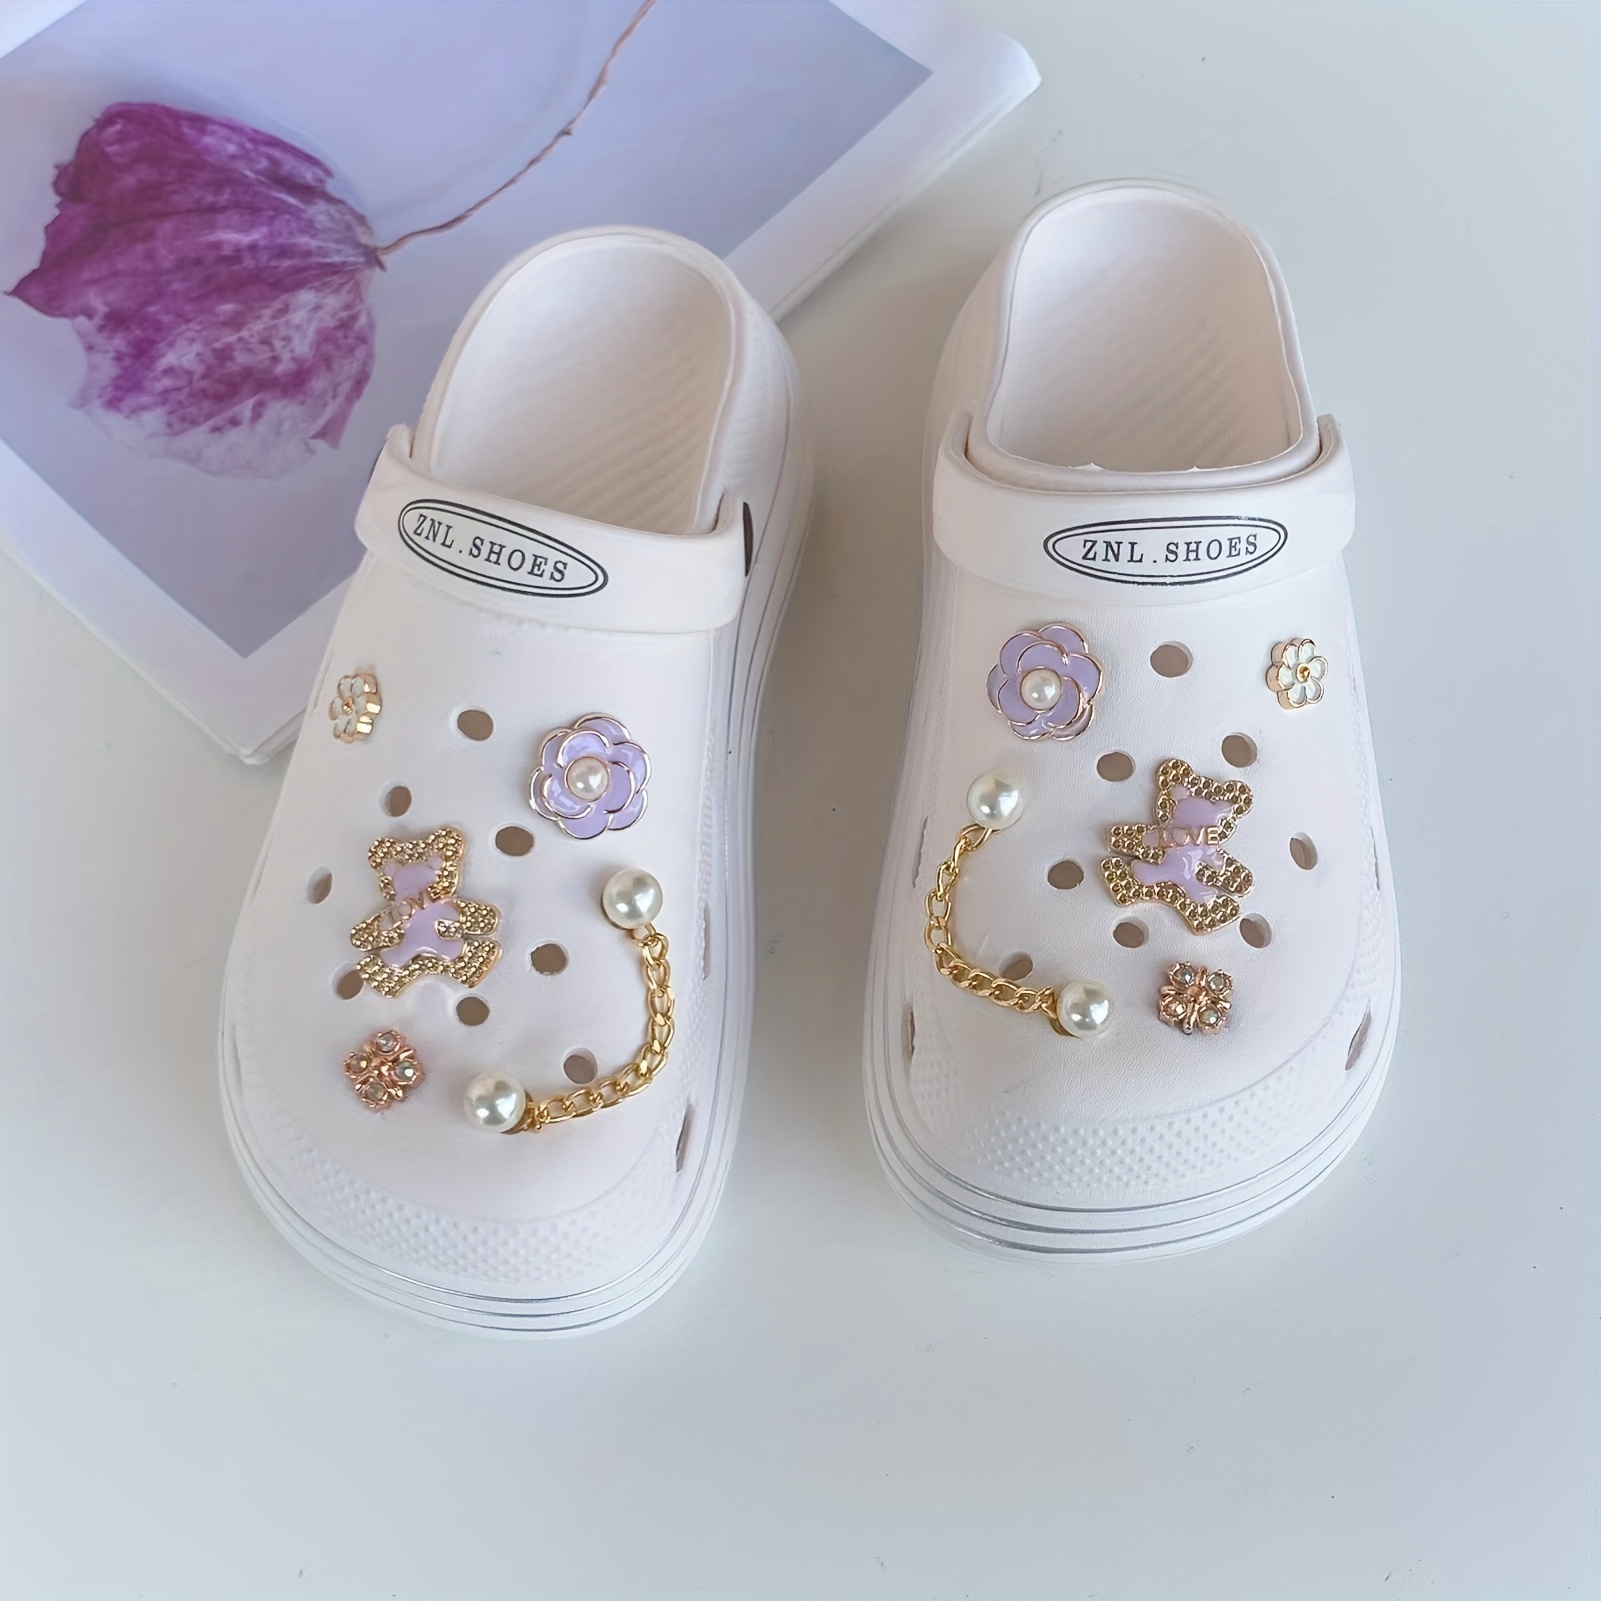 10pcs/set Bling Flowers Shoe Charms Compatible With Croc Clog